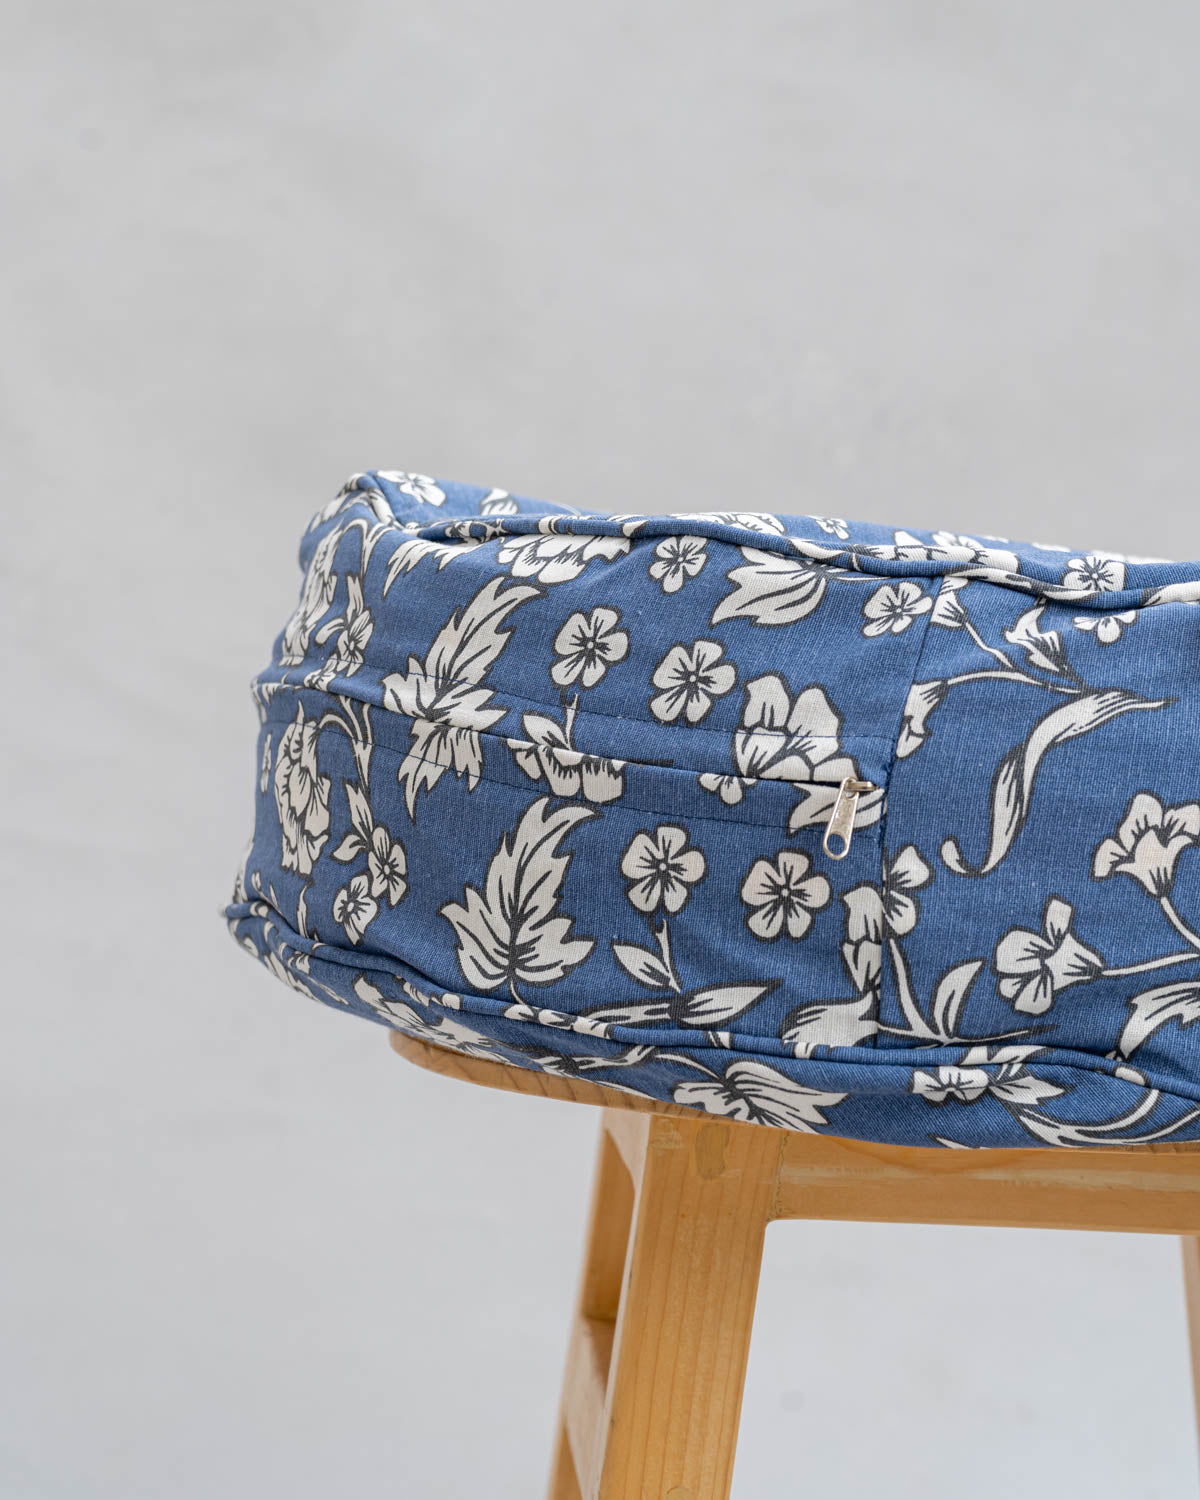 Marigold Printed Cotton Round Floor Cushion Cover - Royal Blue